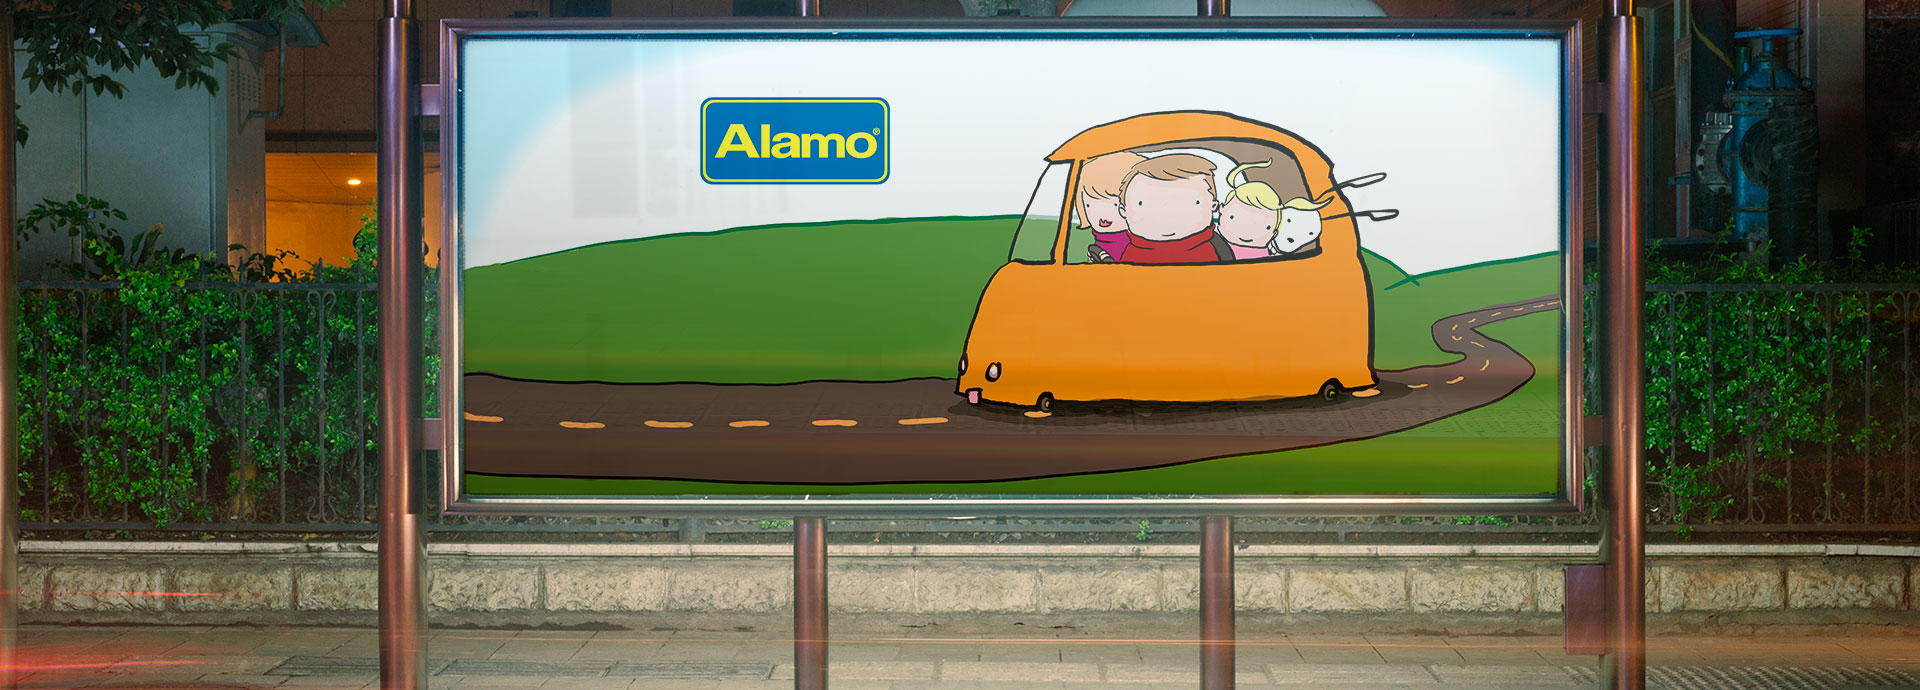 Alquila tu carro con Alamo Rent a Car